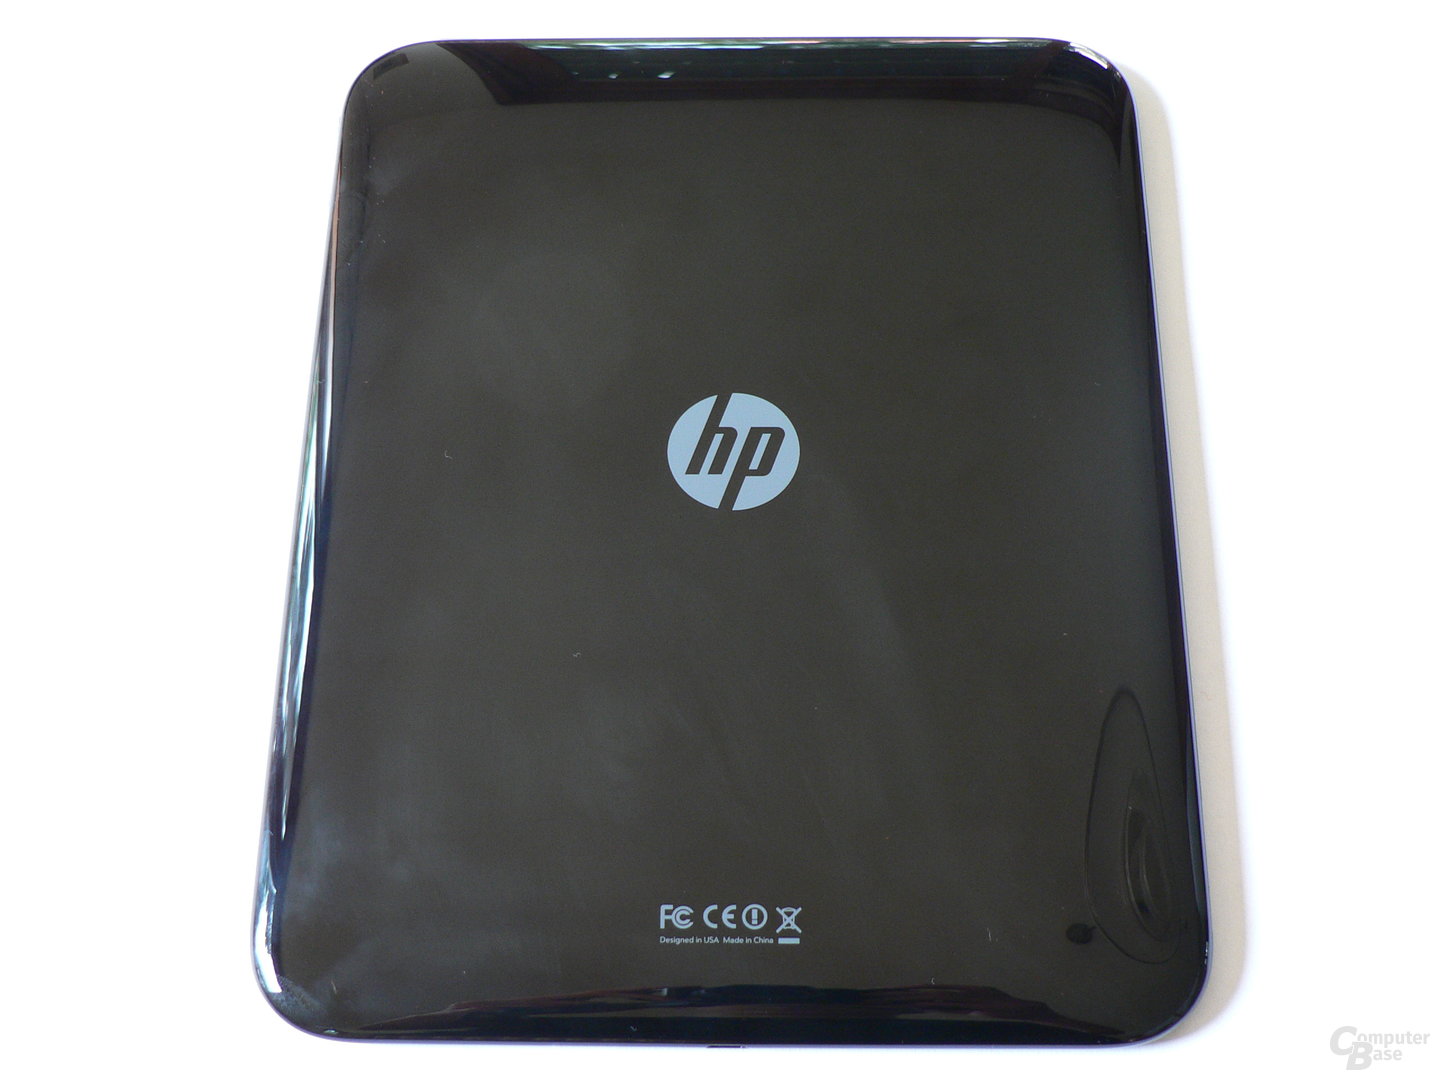 Klavierlack-Rückseite des HP TouchPad